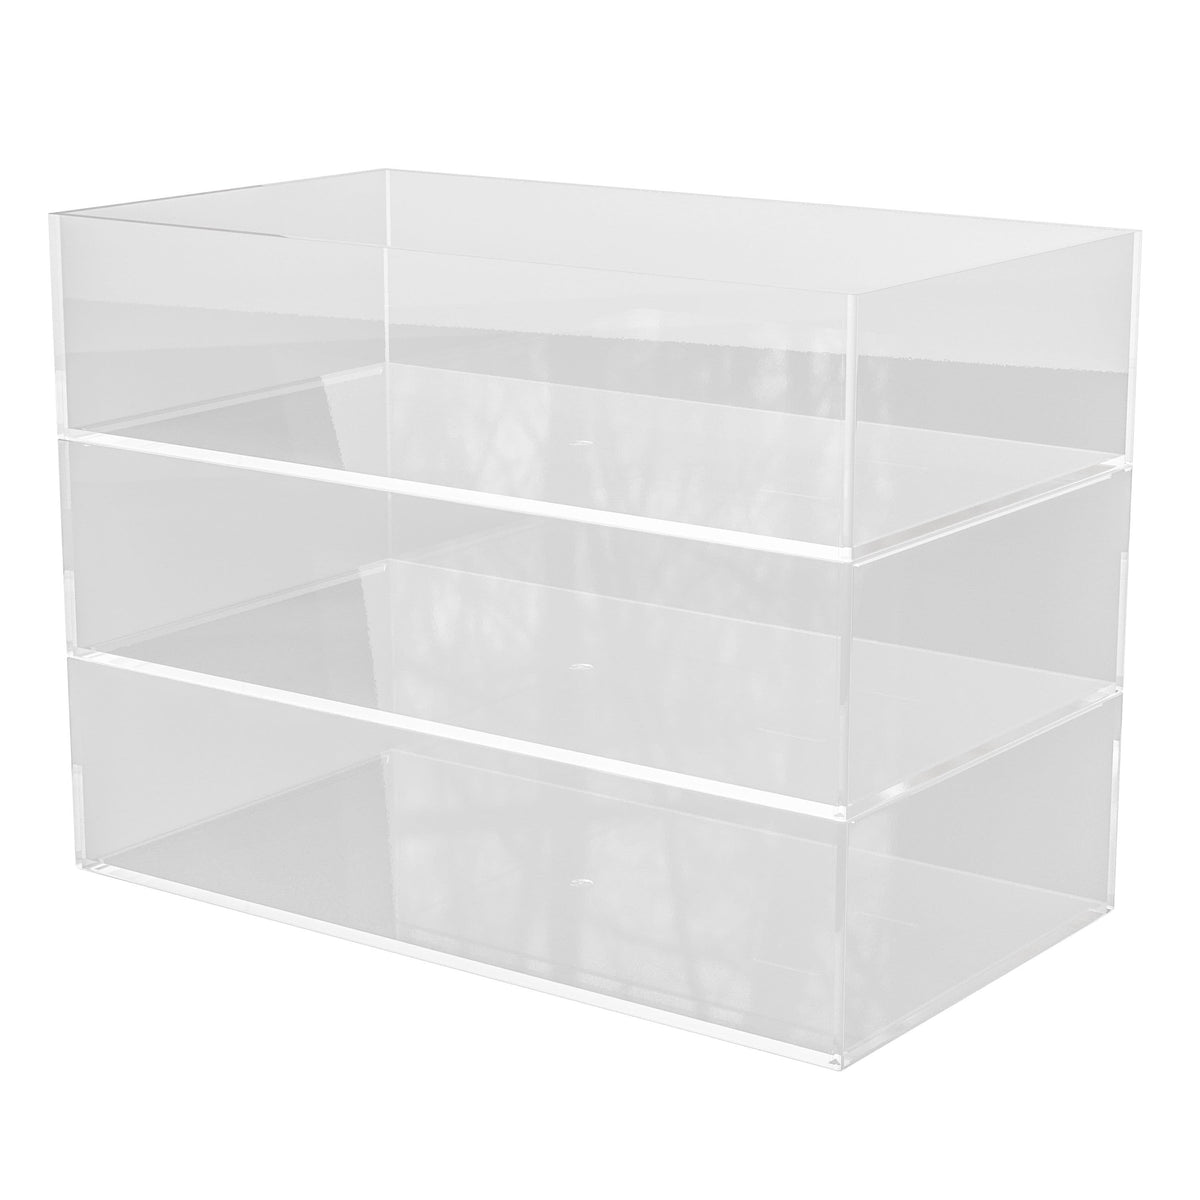 Set of 3 Clear Plastic Stackable Desktop Storage Organizer Trays - 3" x 7.5"